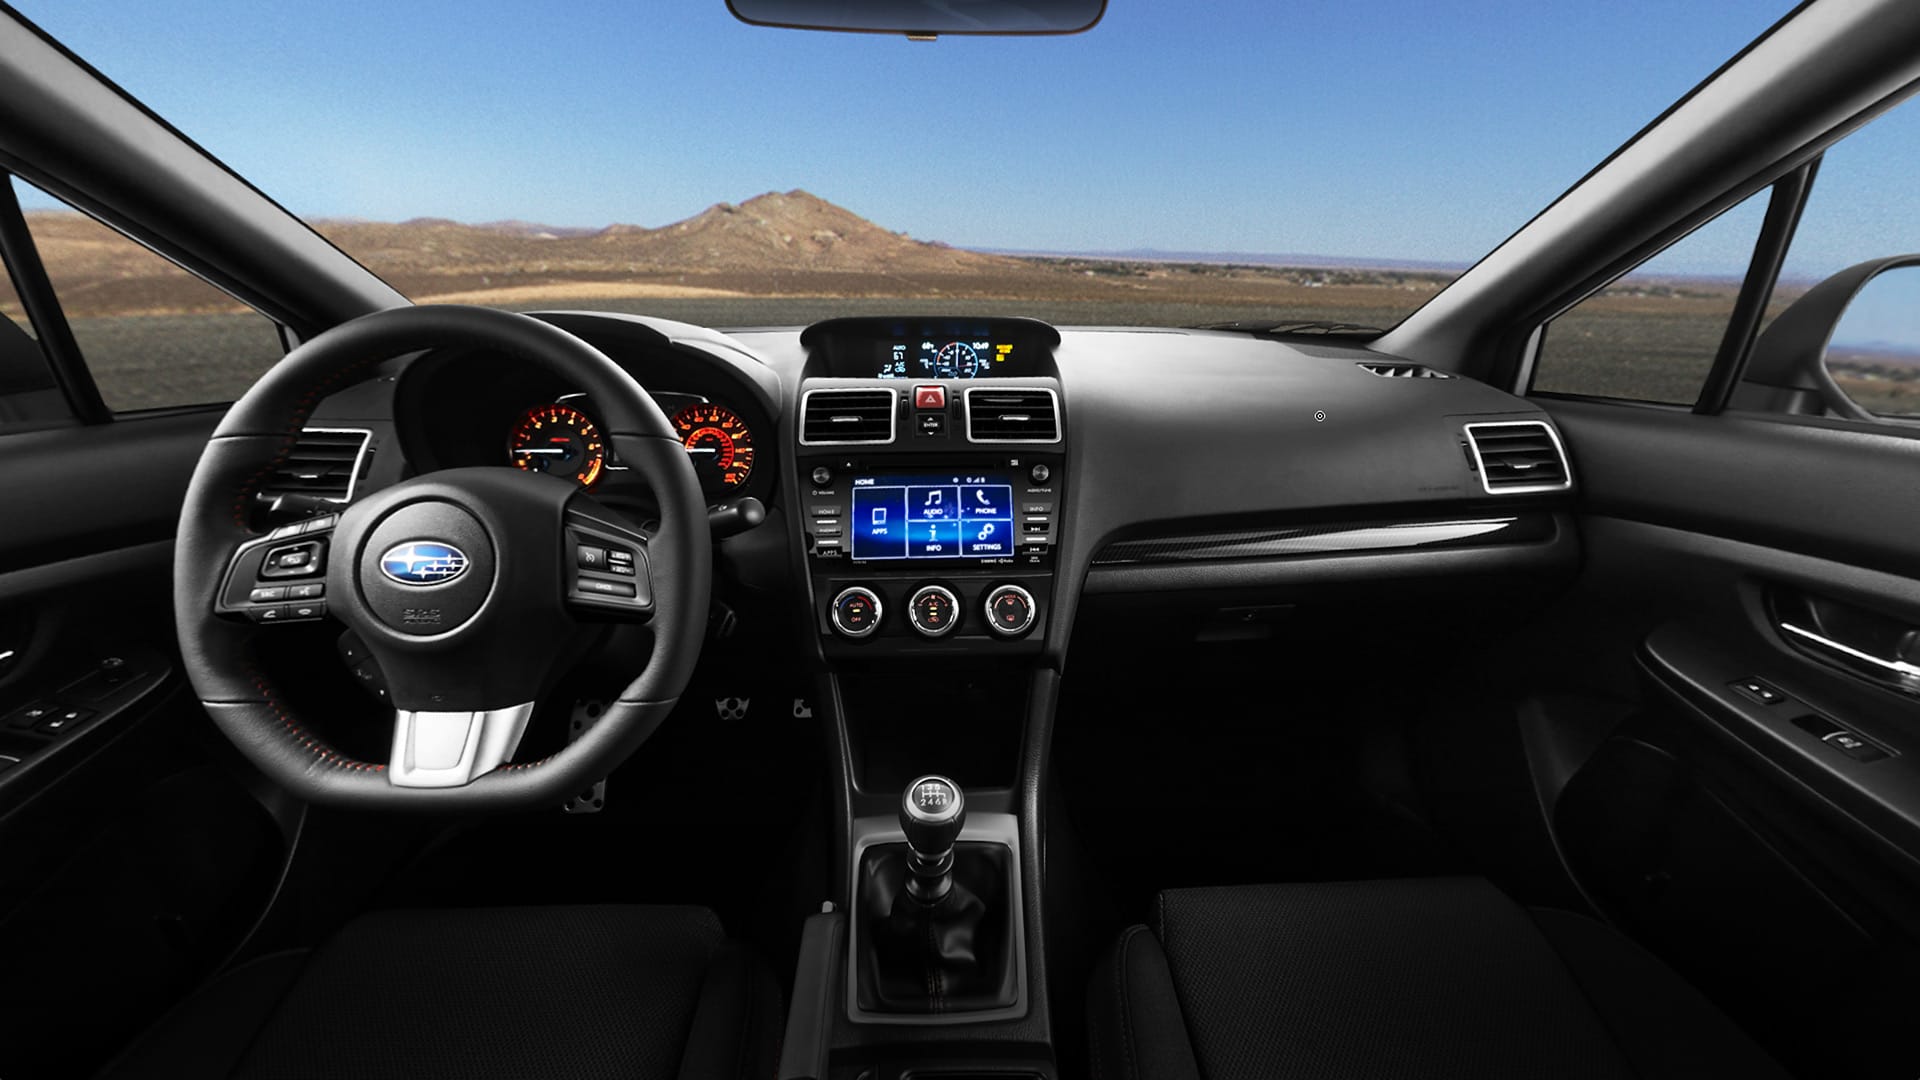 2017 Subaru Wrx Interior View 360 Degree Interior View